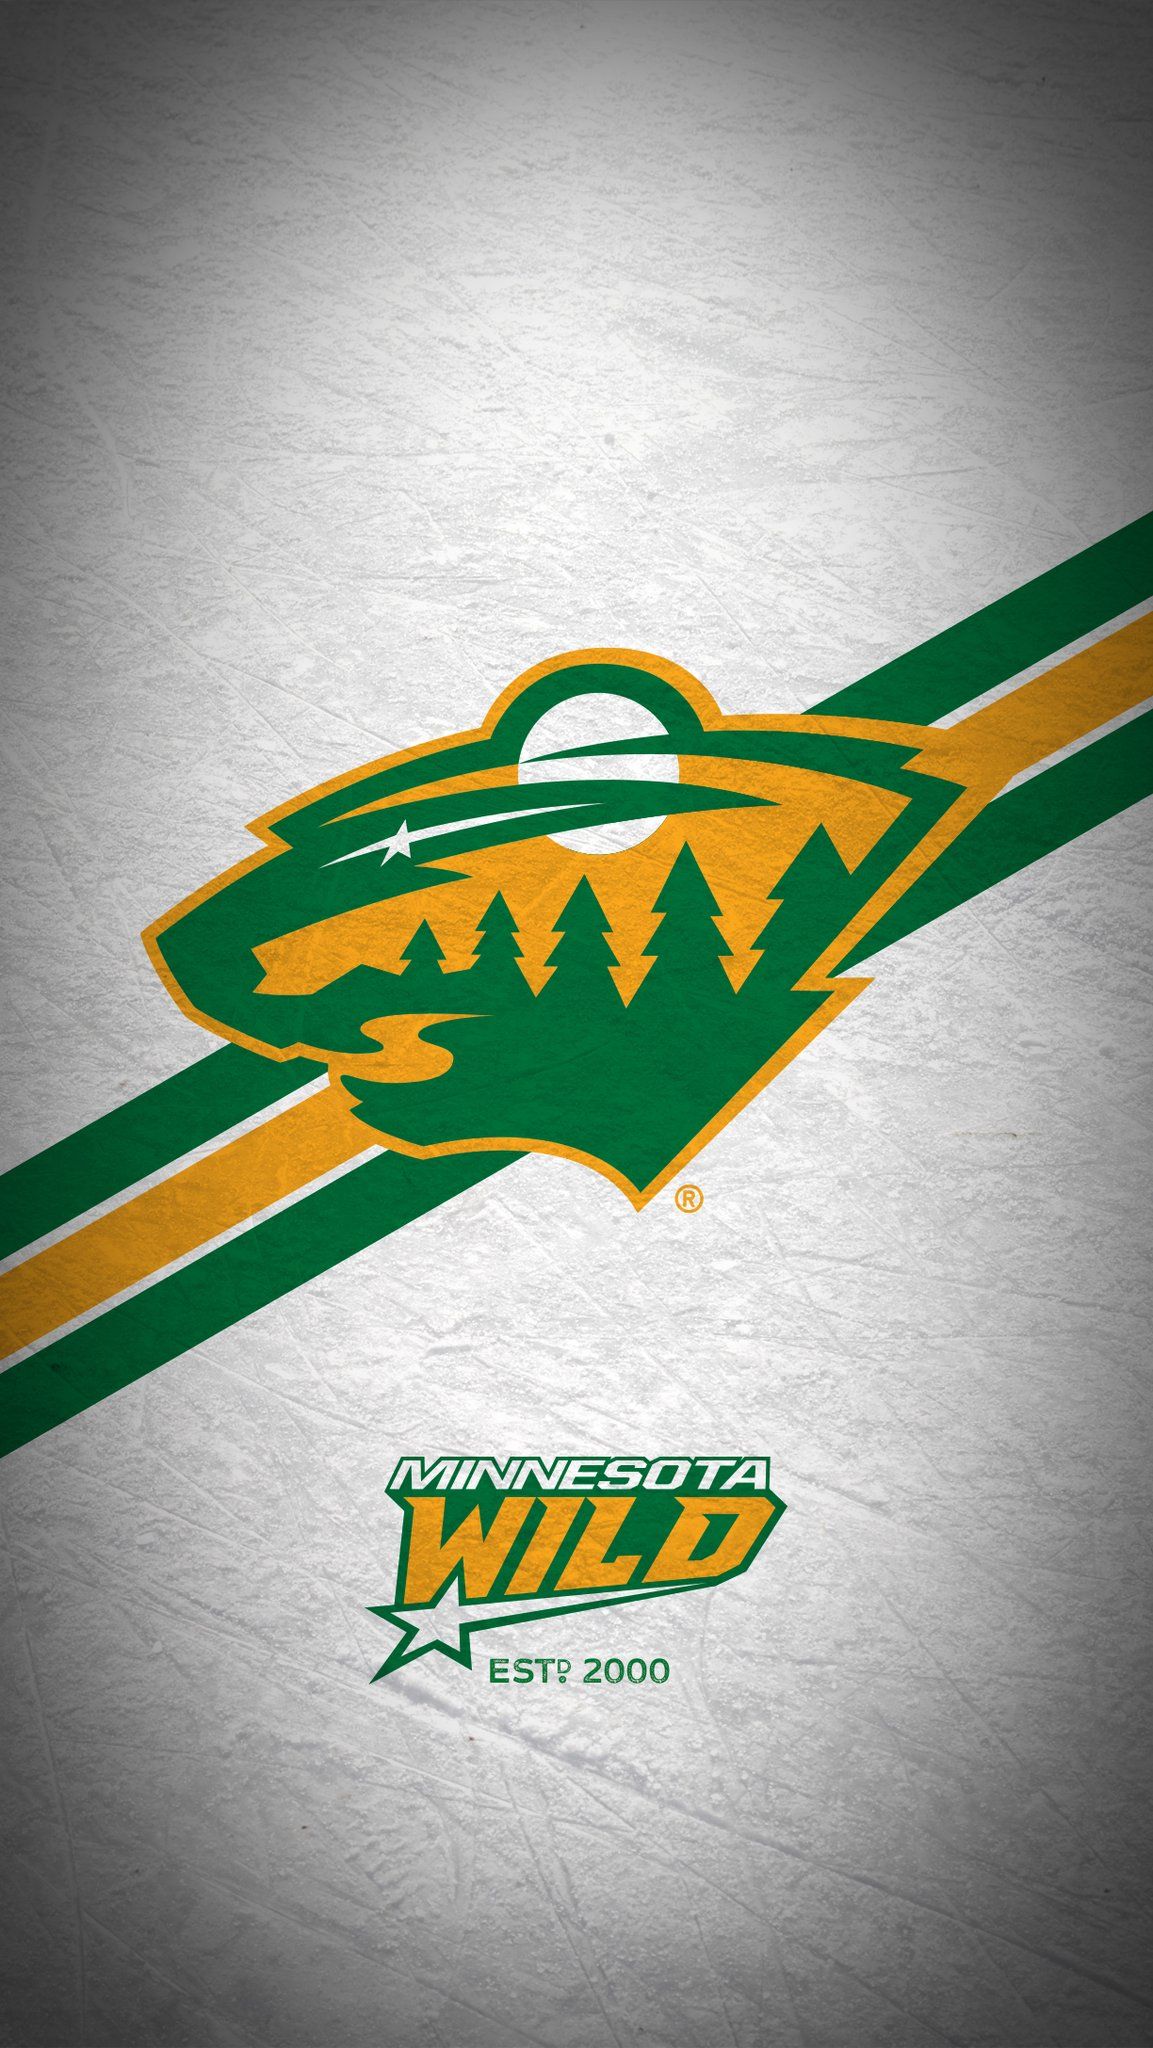 Minnesota wild on twitter minnesota wild wild hockey nhl wallpaper